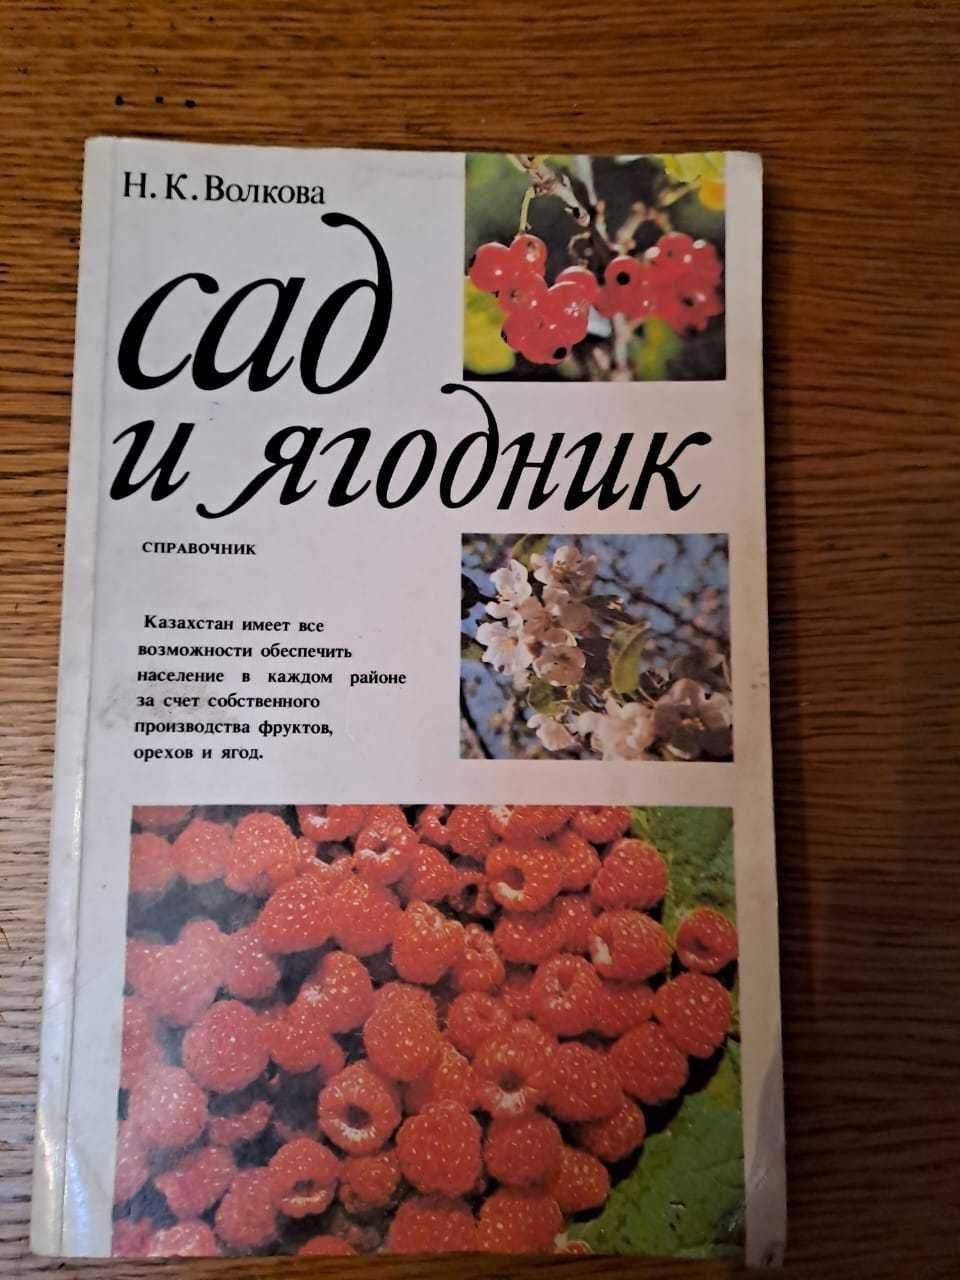 Книги по кулинарии и ведению домашнего хозяйства